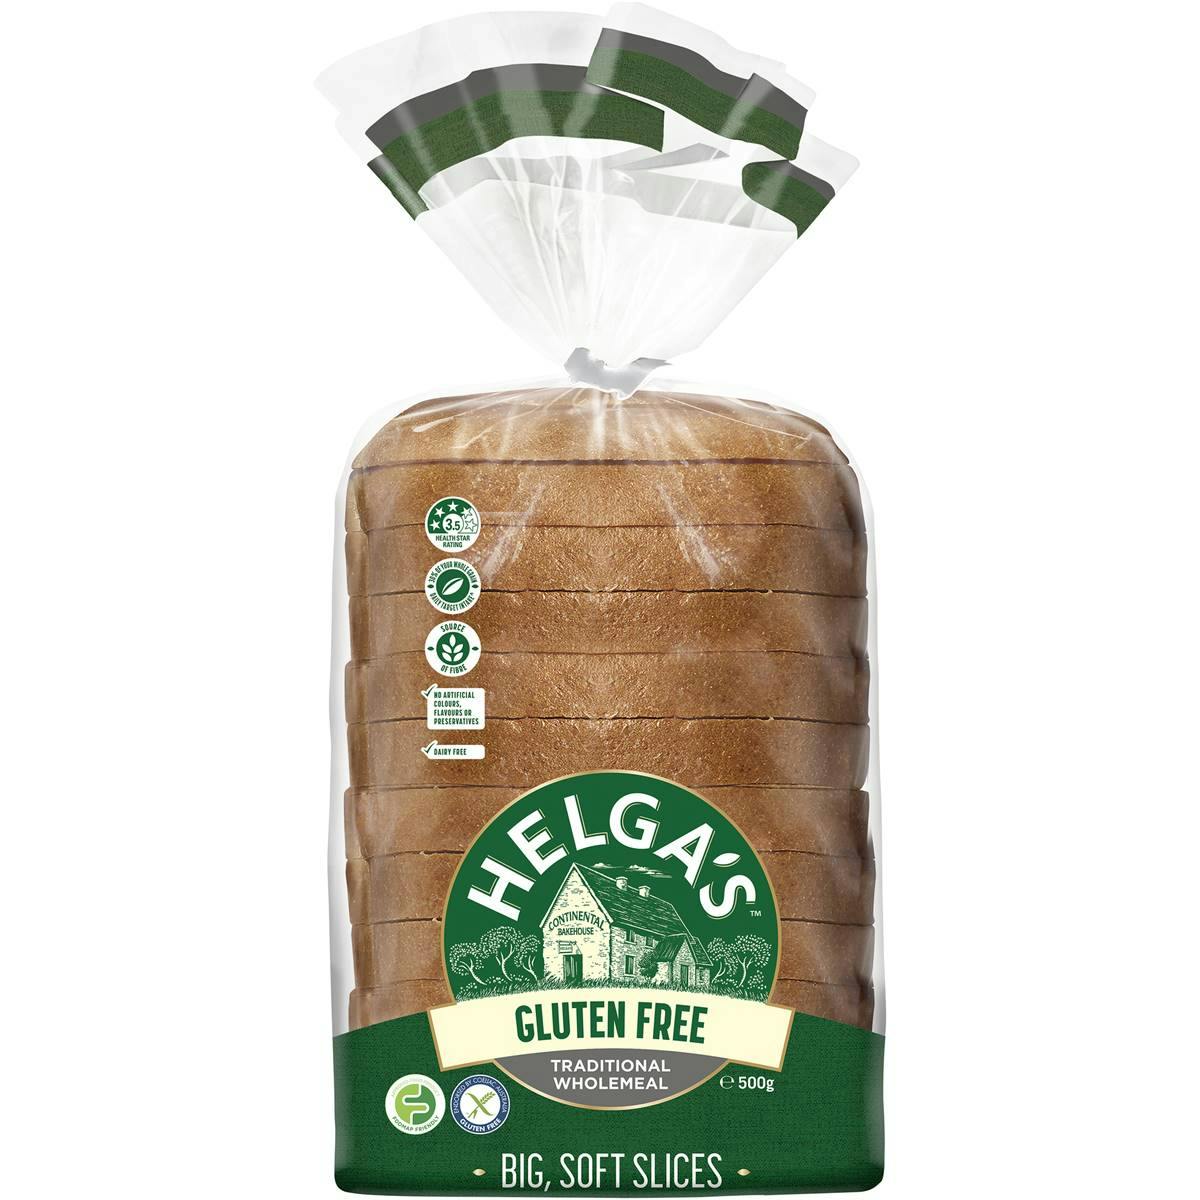 Helga's Gluten Free Wholemeal Loaf